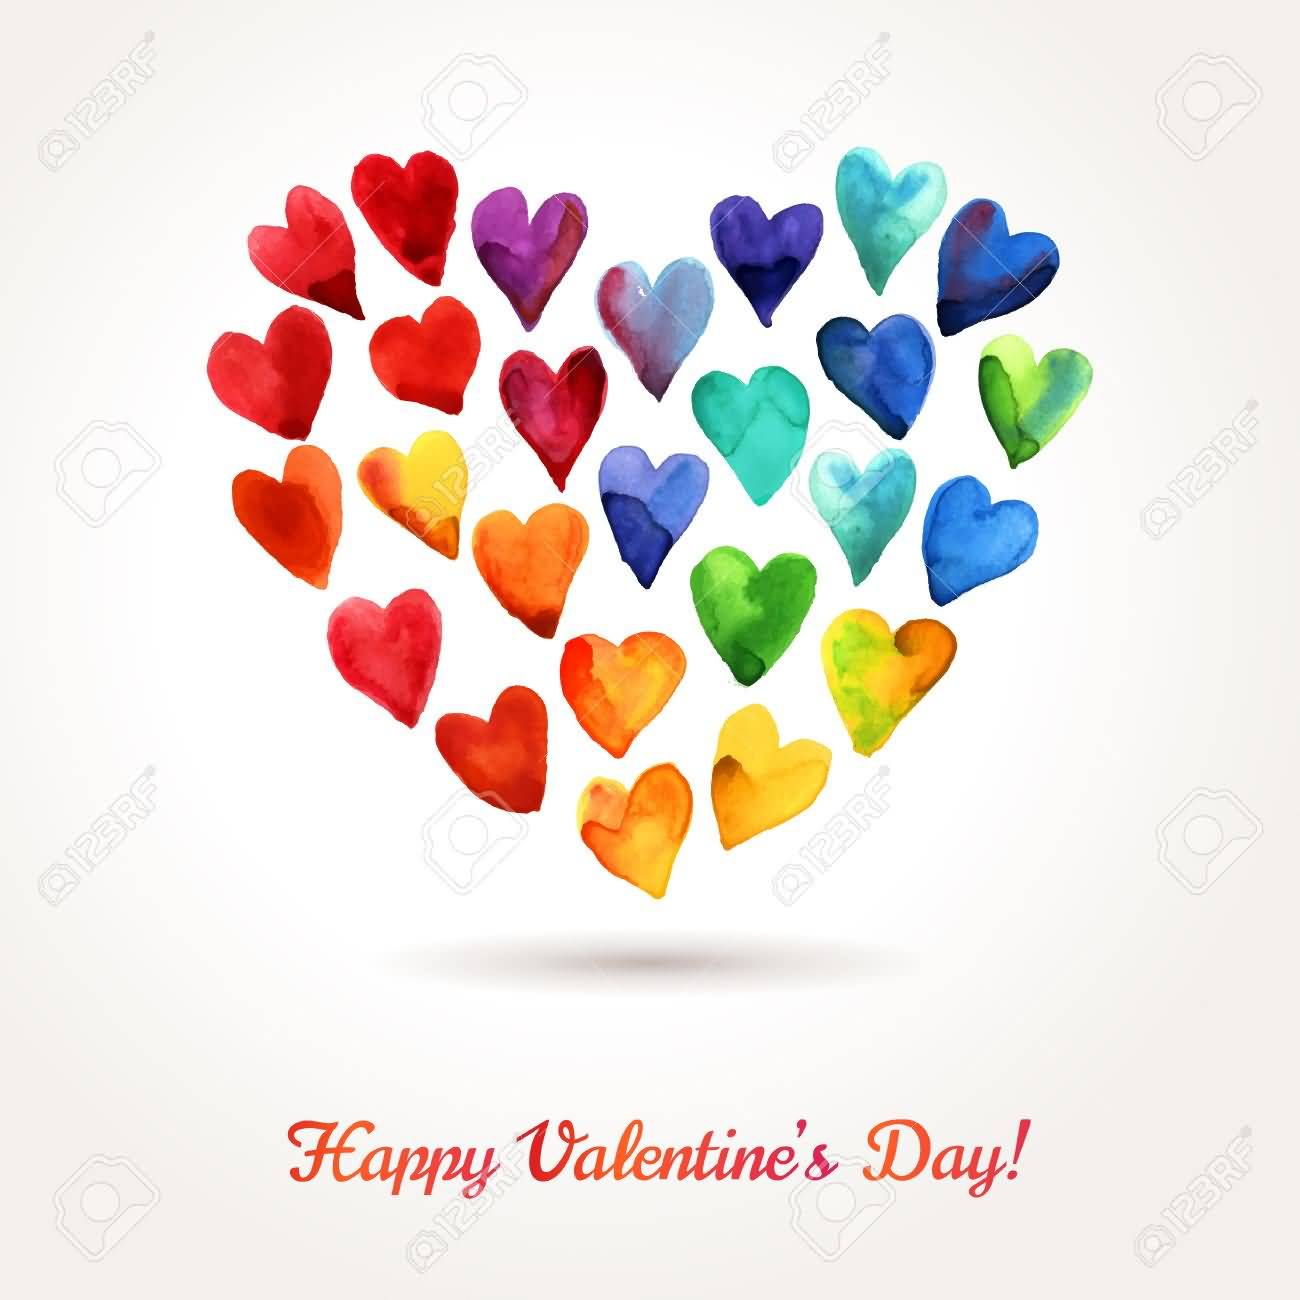 Happy Valentine’s Day Colorful Hearts